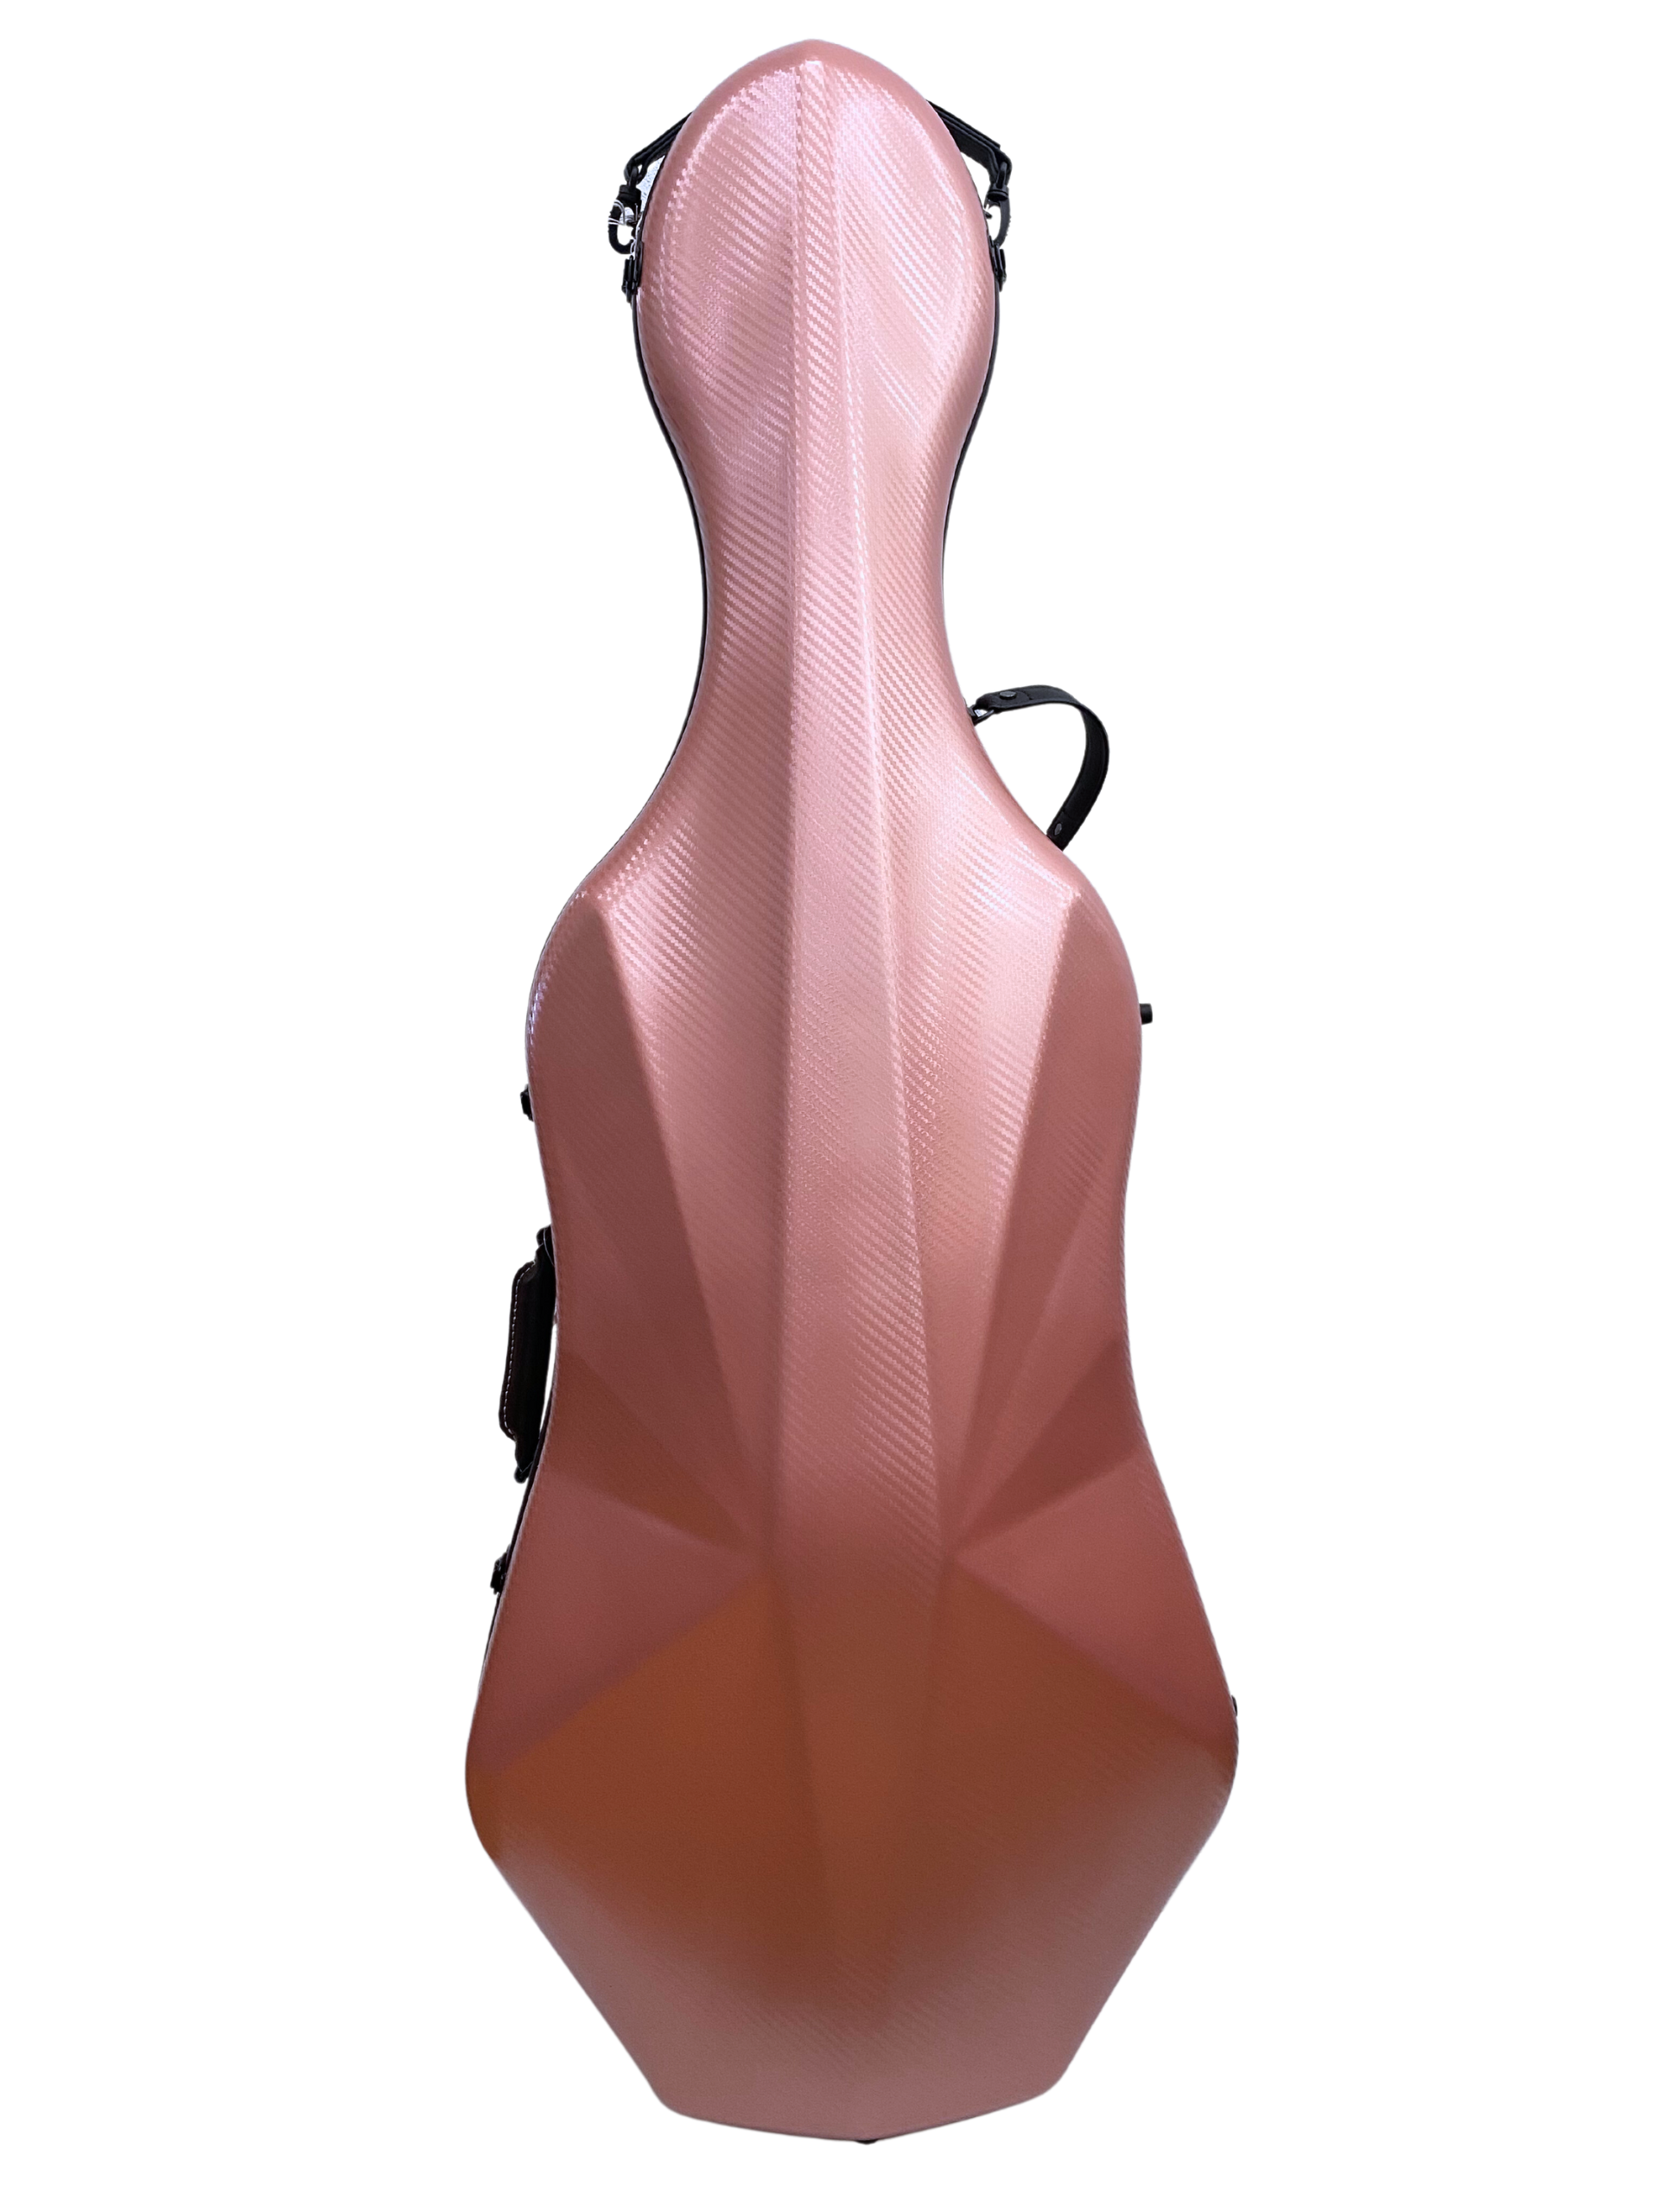 Anderson cello case rose front